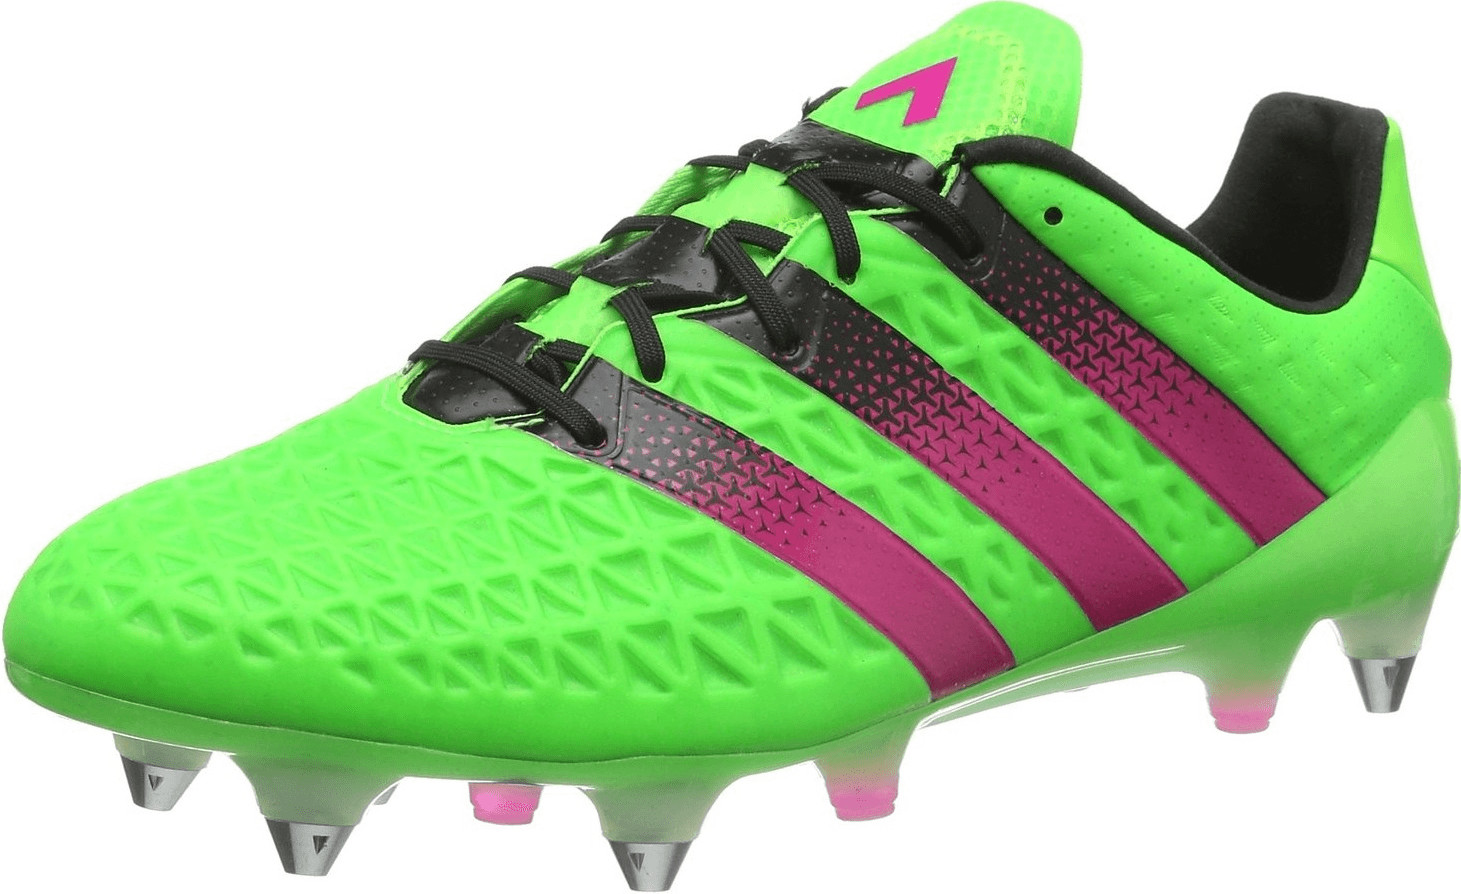 Adidas Ace 16.1 SG Men solar green/shock pink/core black